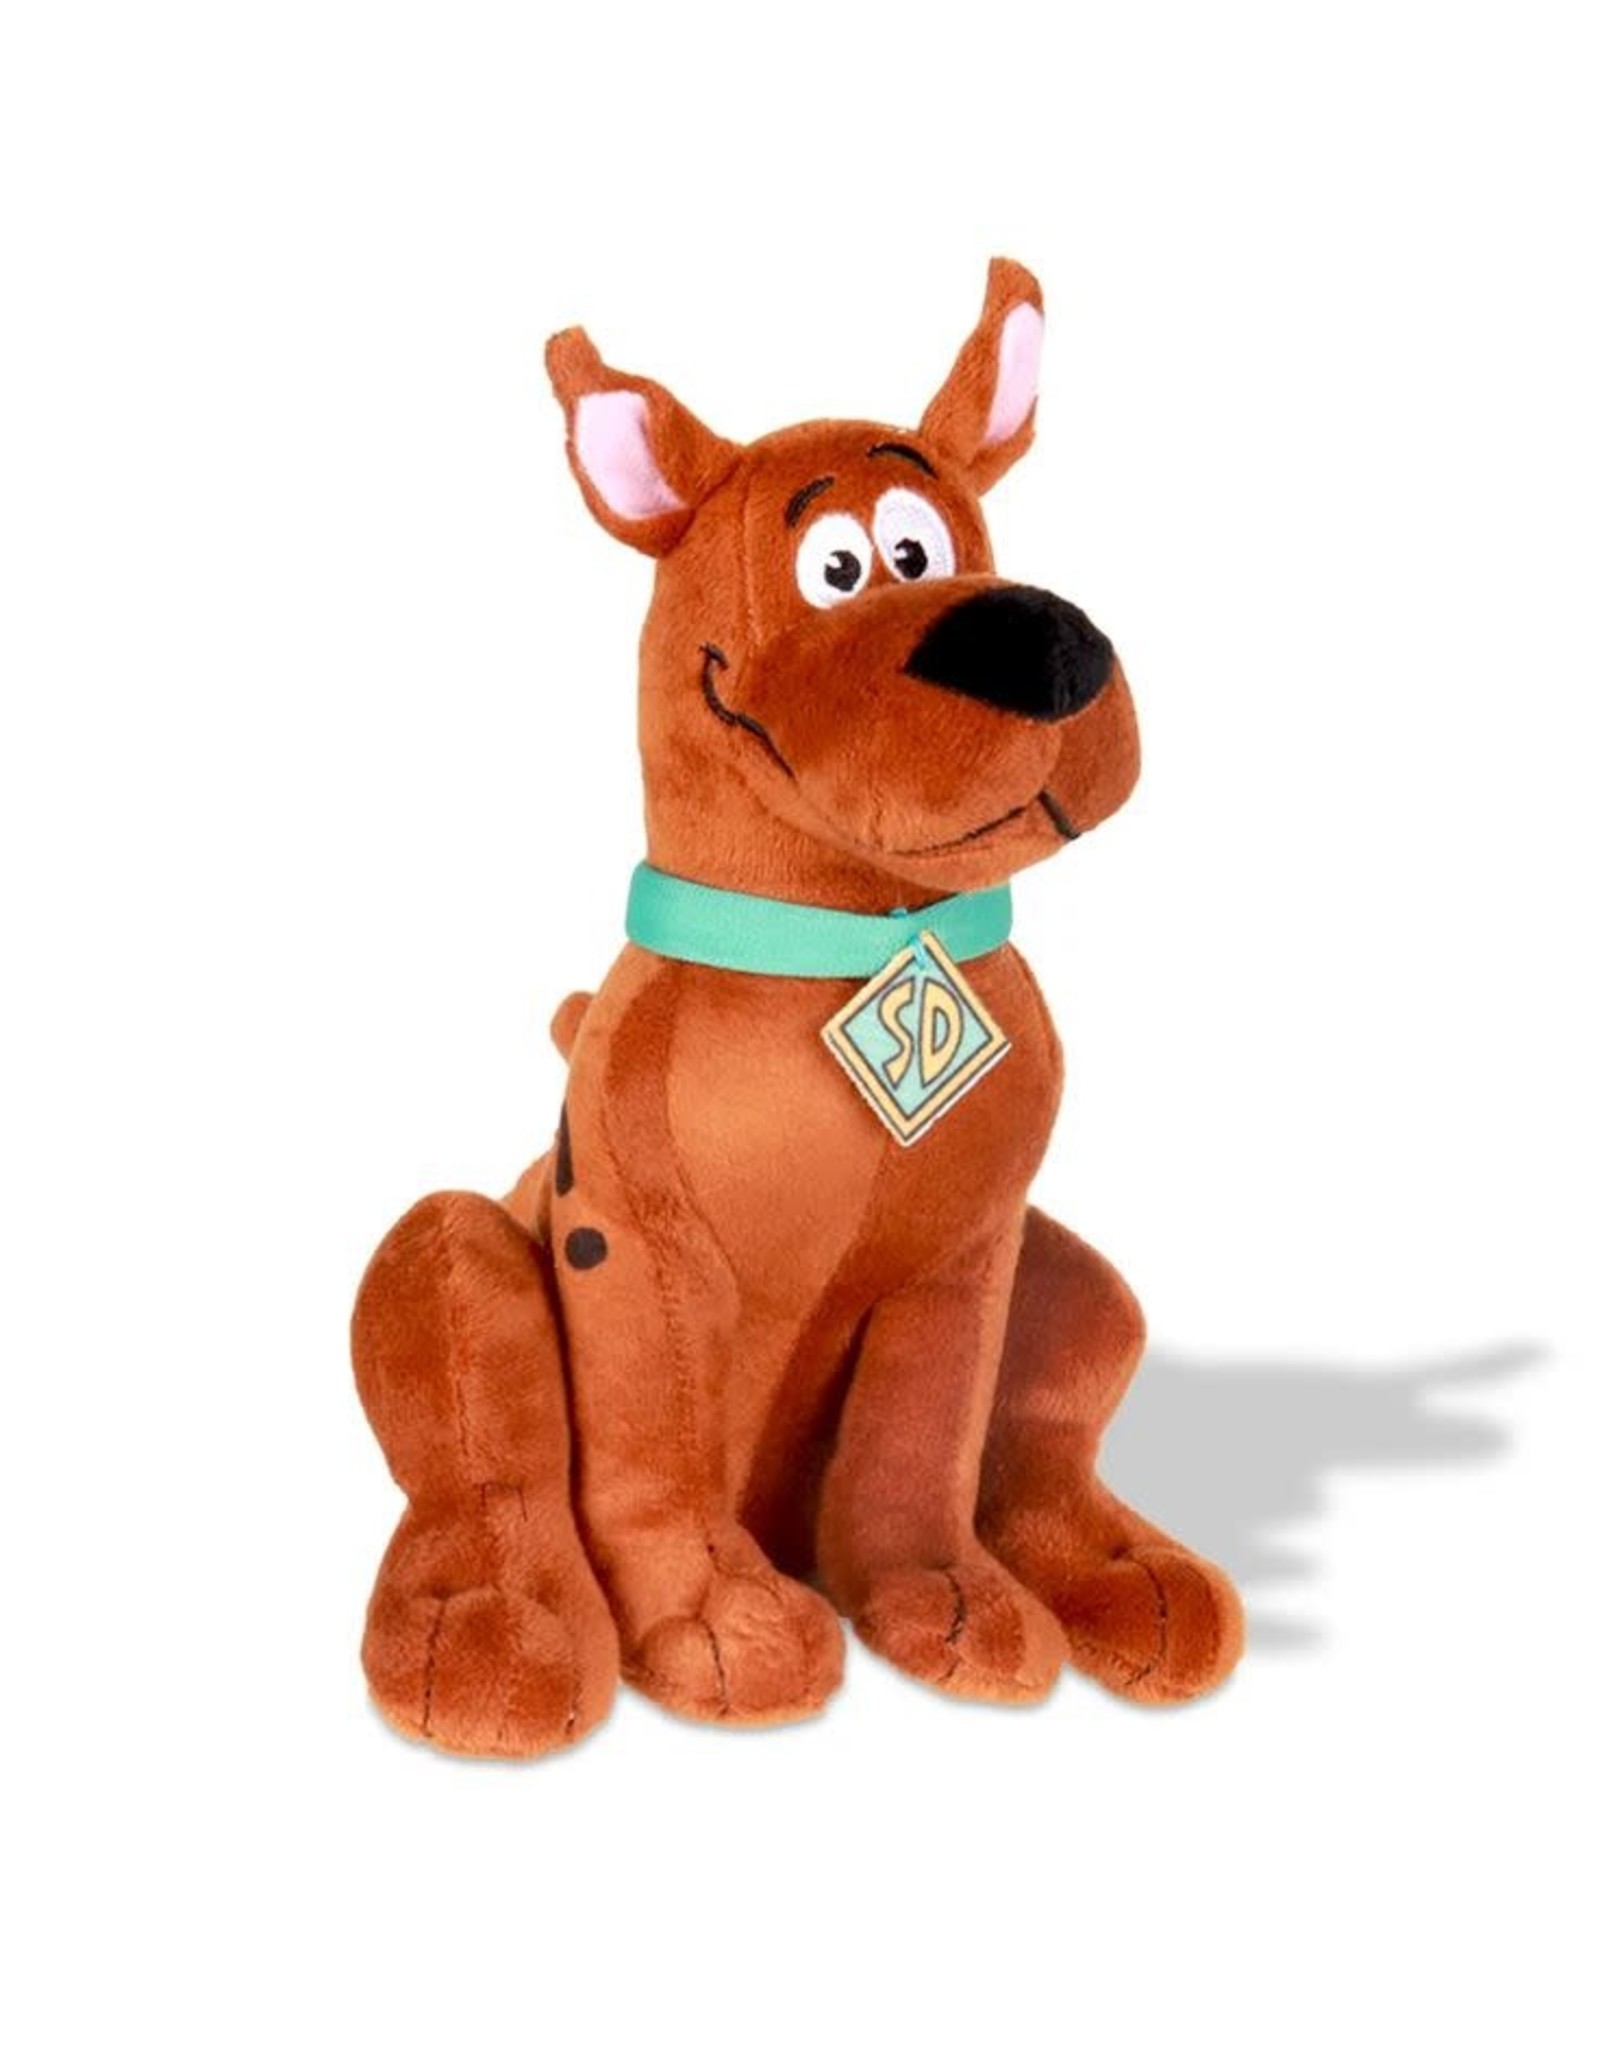 Scooby Doo Plush Small